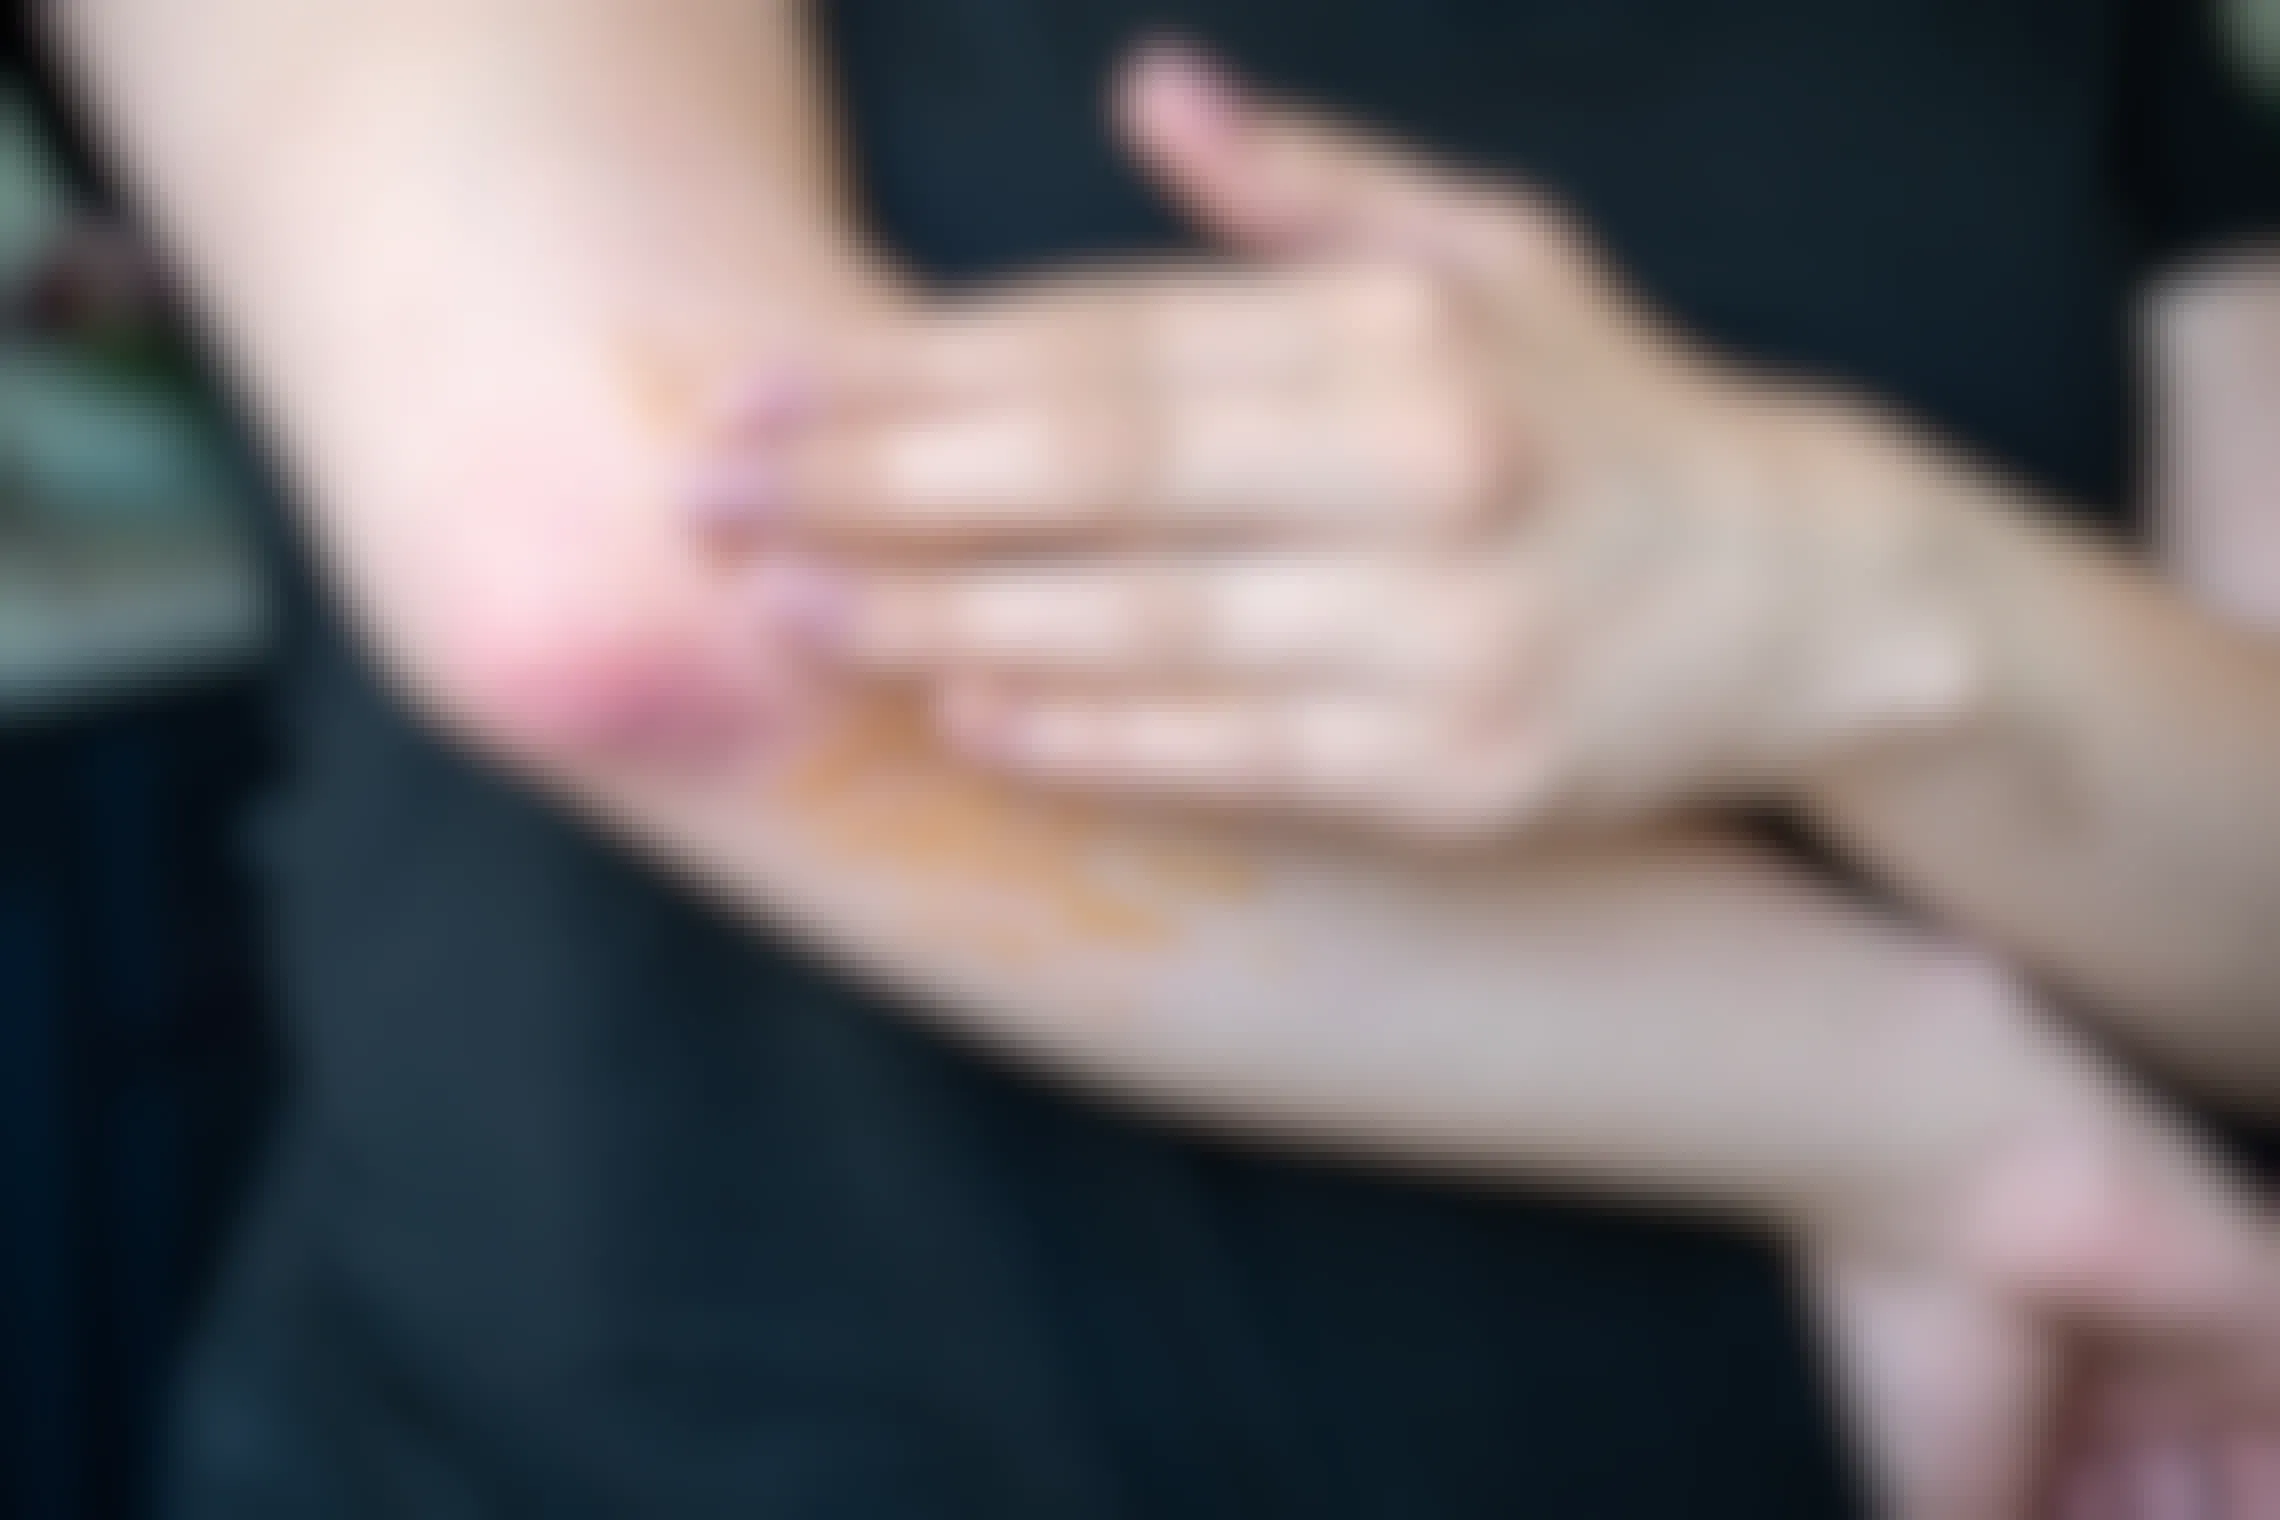 A woman applying Manuka honey to a rash on her elbow.